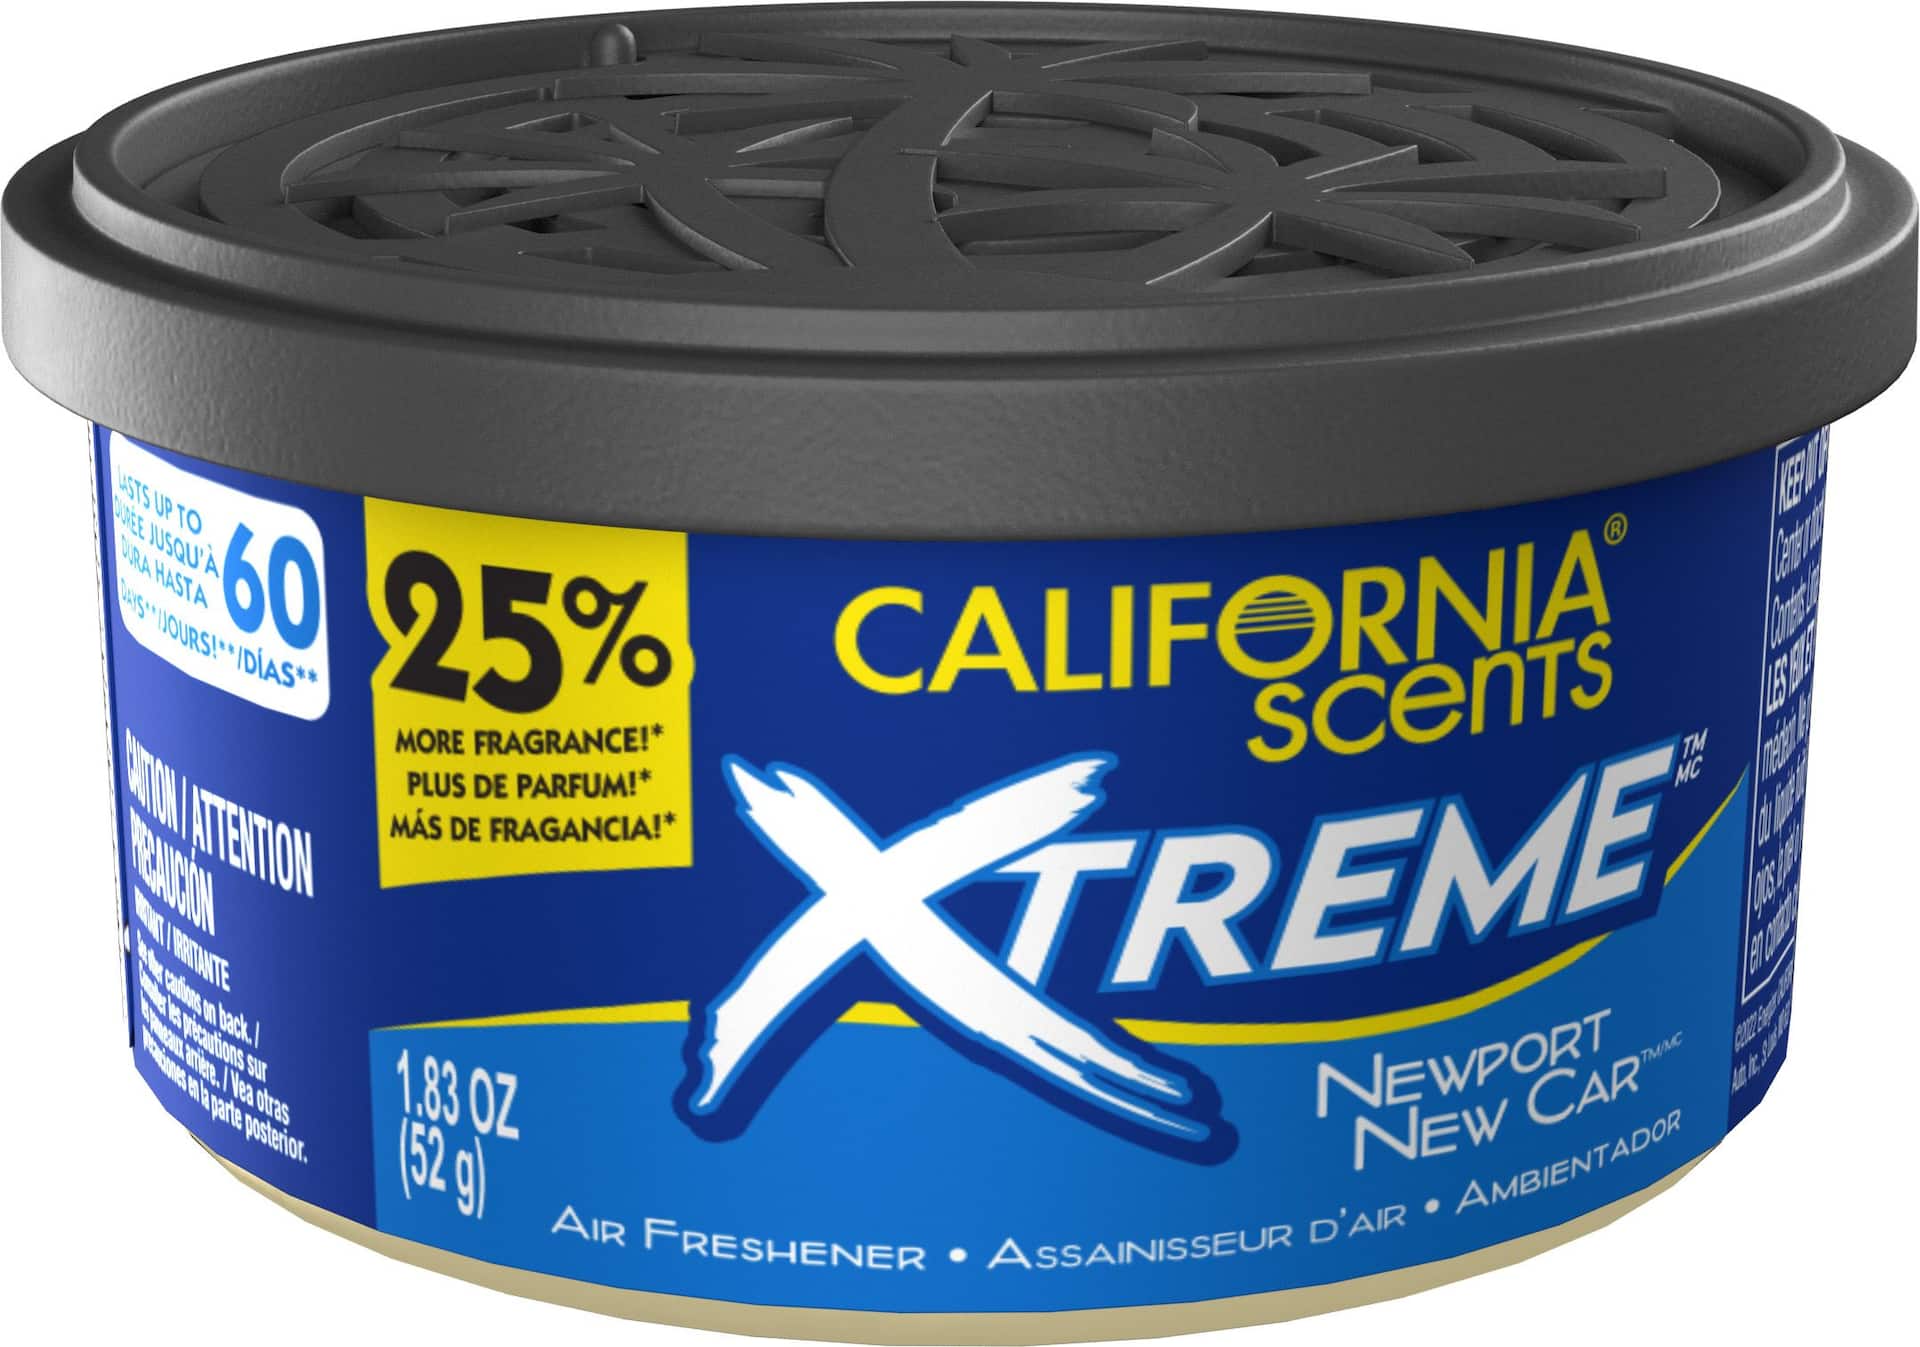 California Scents Can/Hidden Air Freshener (Newport New Car Scent, 1 Pack)